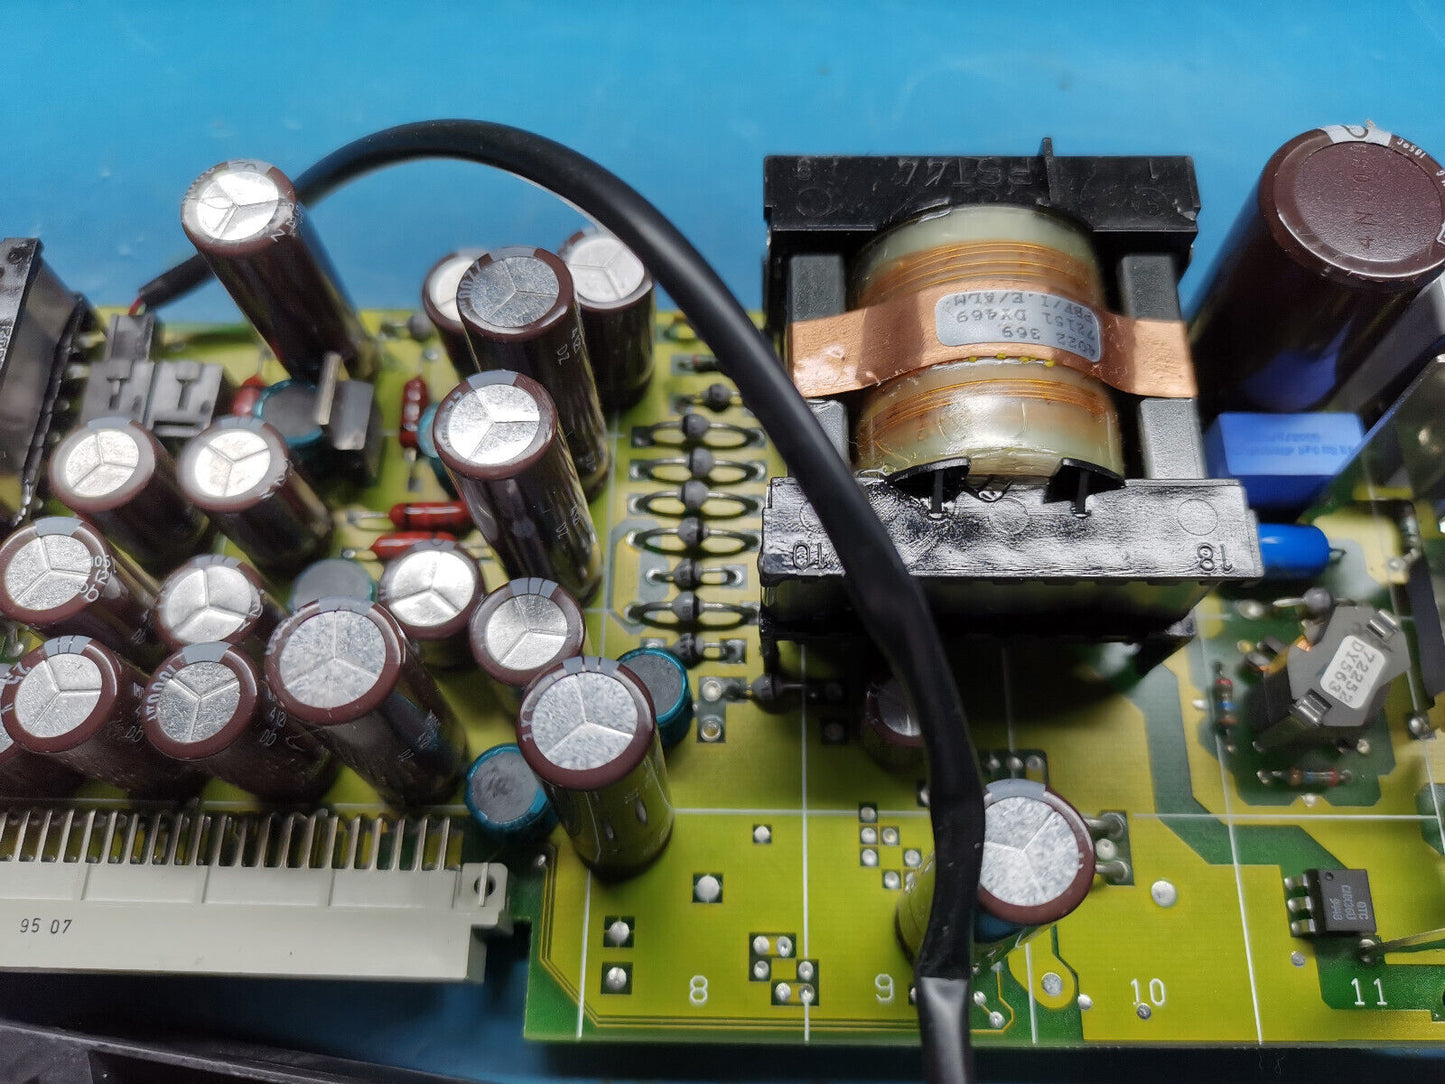 Fluke PM3082 Oscilloscope Power Supply Board